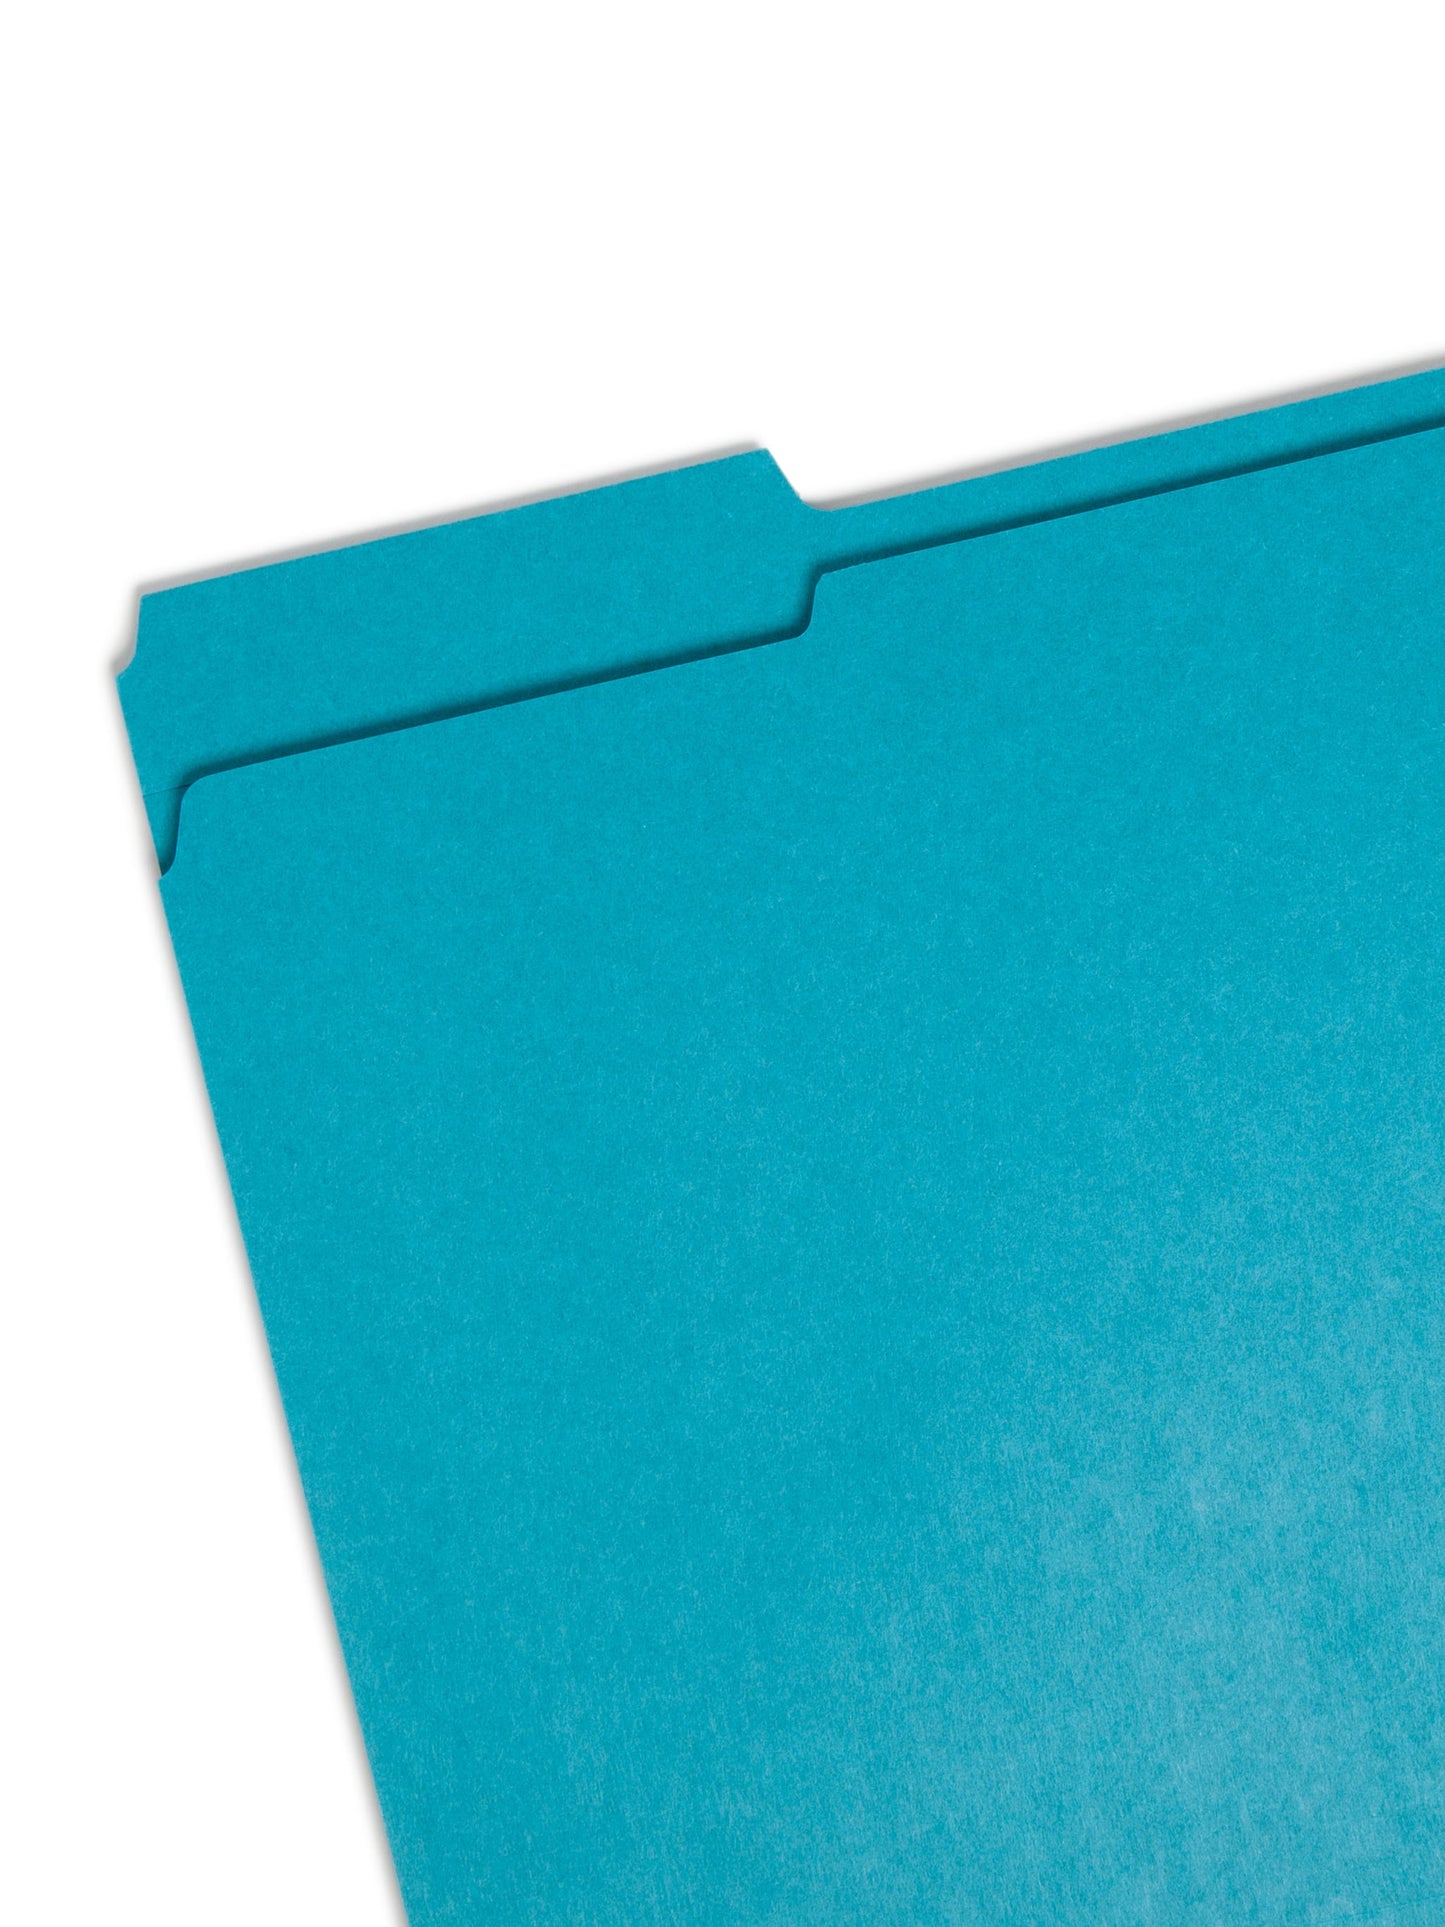 Reinforced Tab File Folders, 1/3-Cut Tab, Teal Color, Letter Size, Set of 100, 086486131346